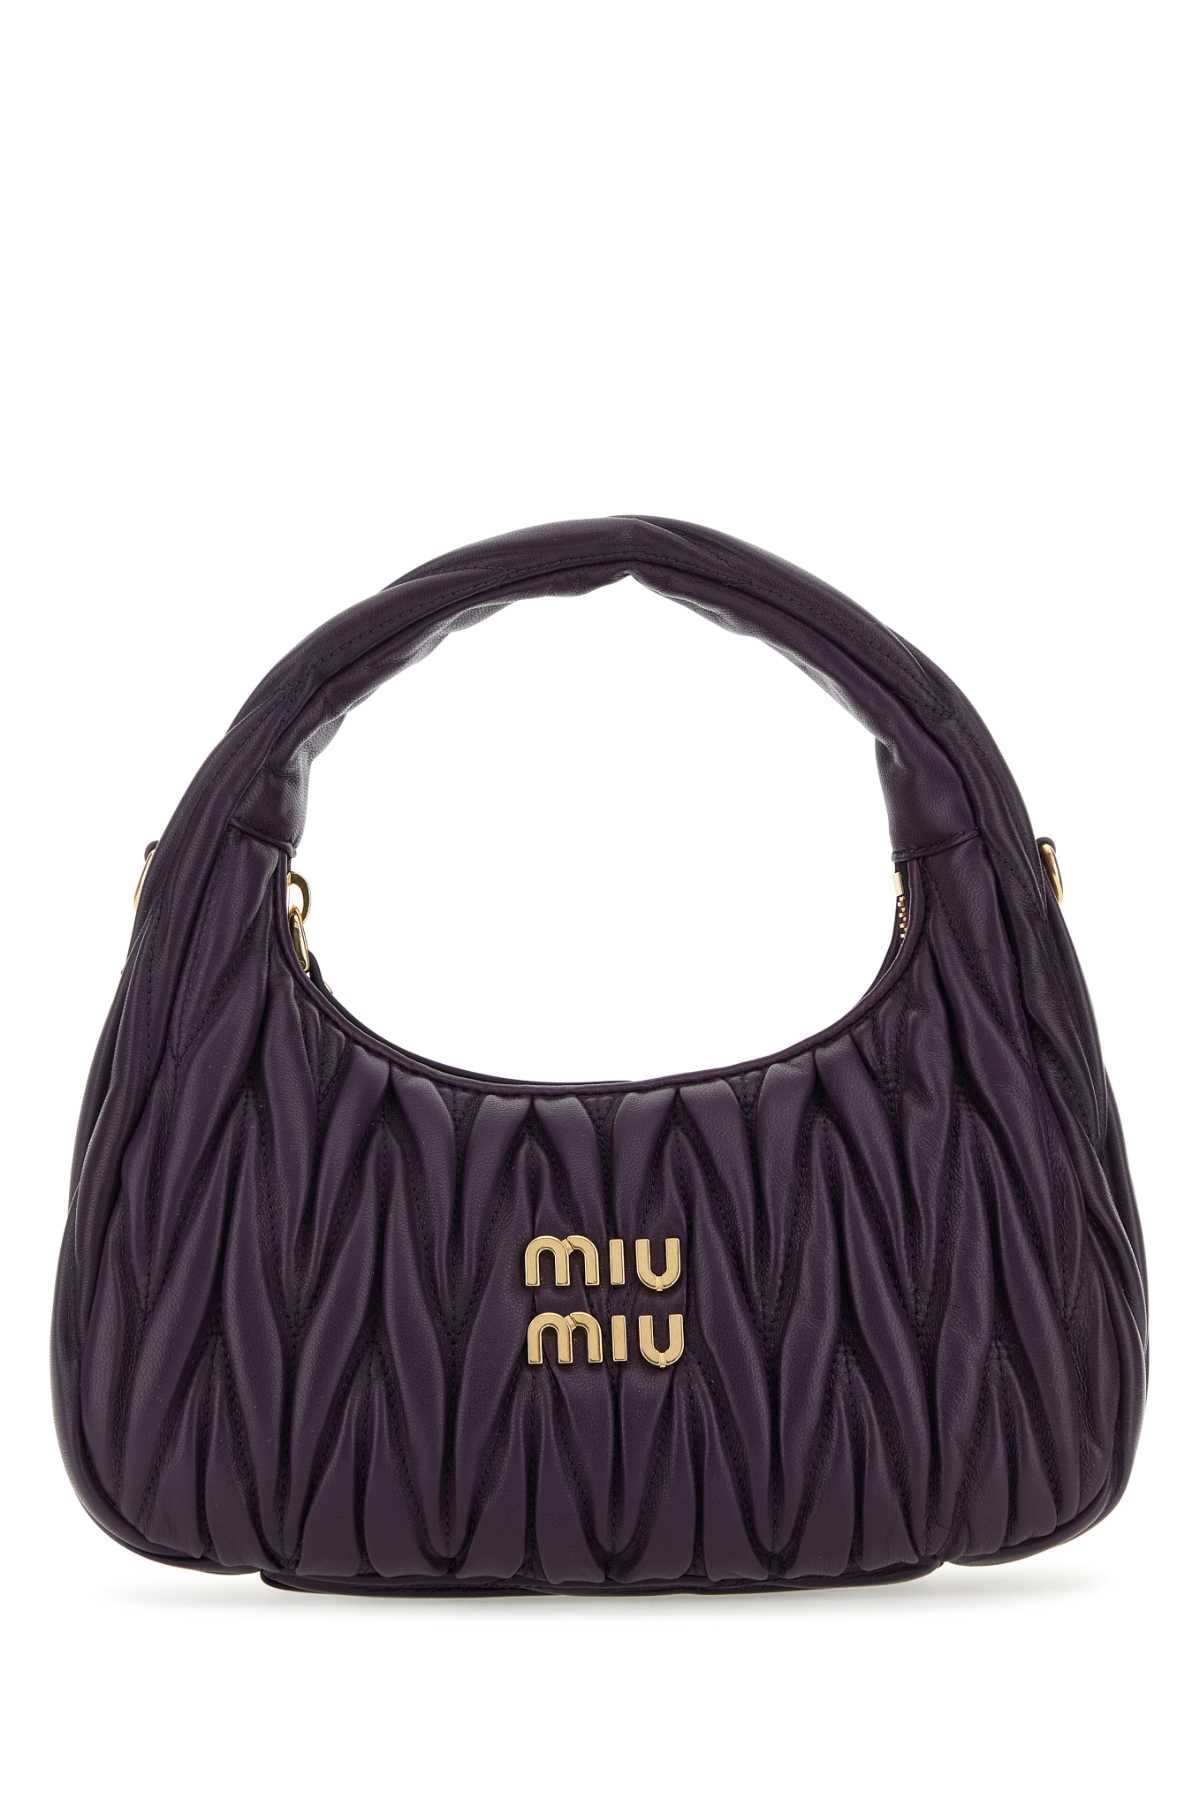 Miu Miu Purple Nappa Leather Handbag In Viola